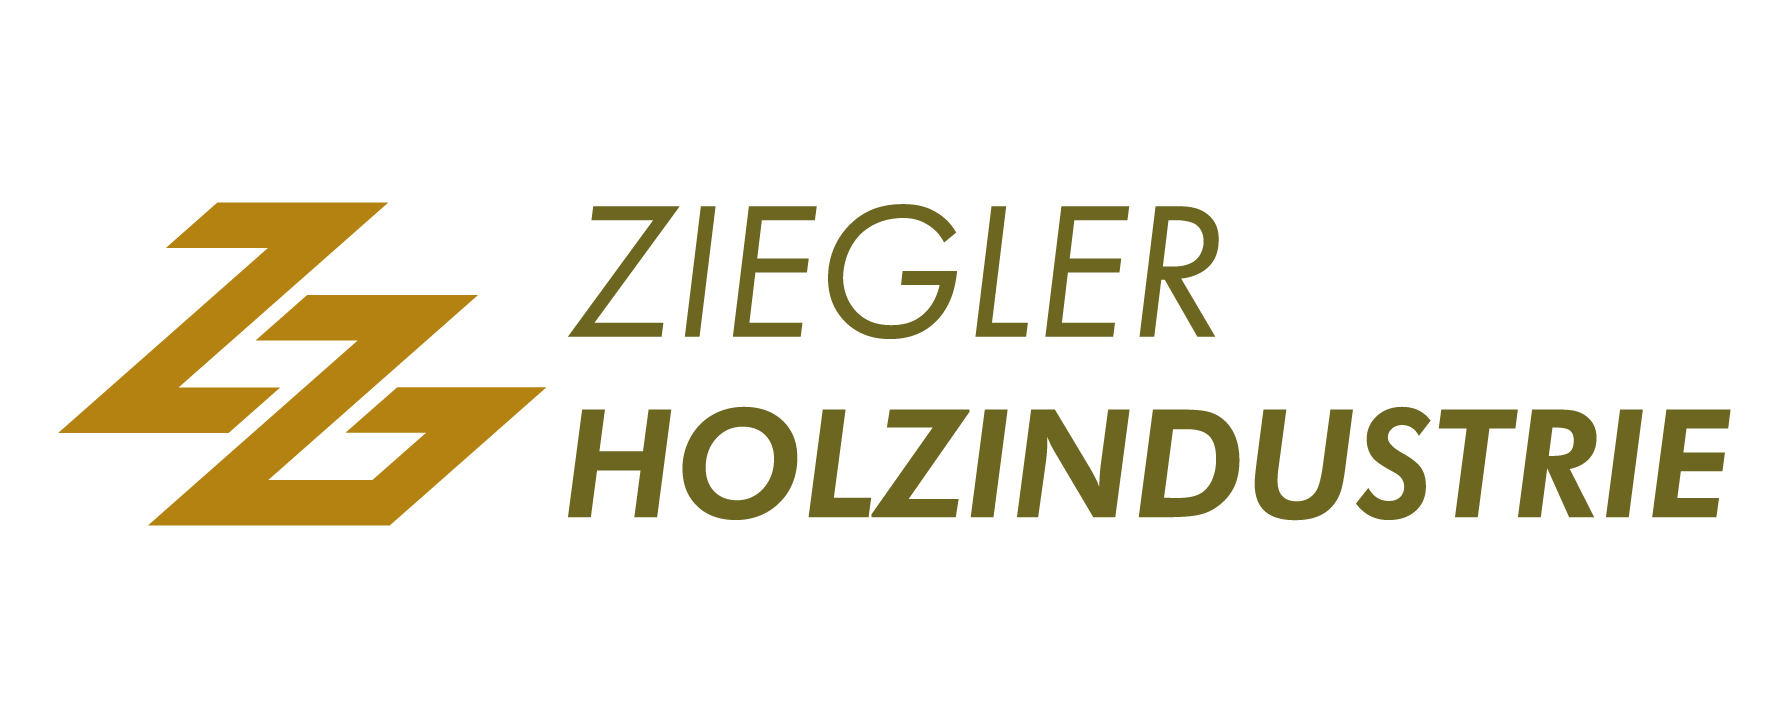 Ziegler Holzindustrie